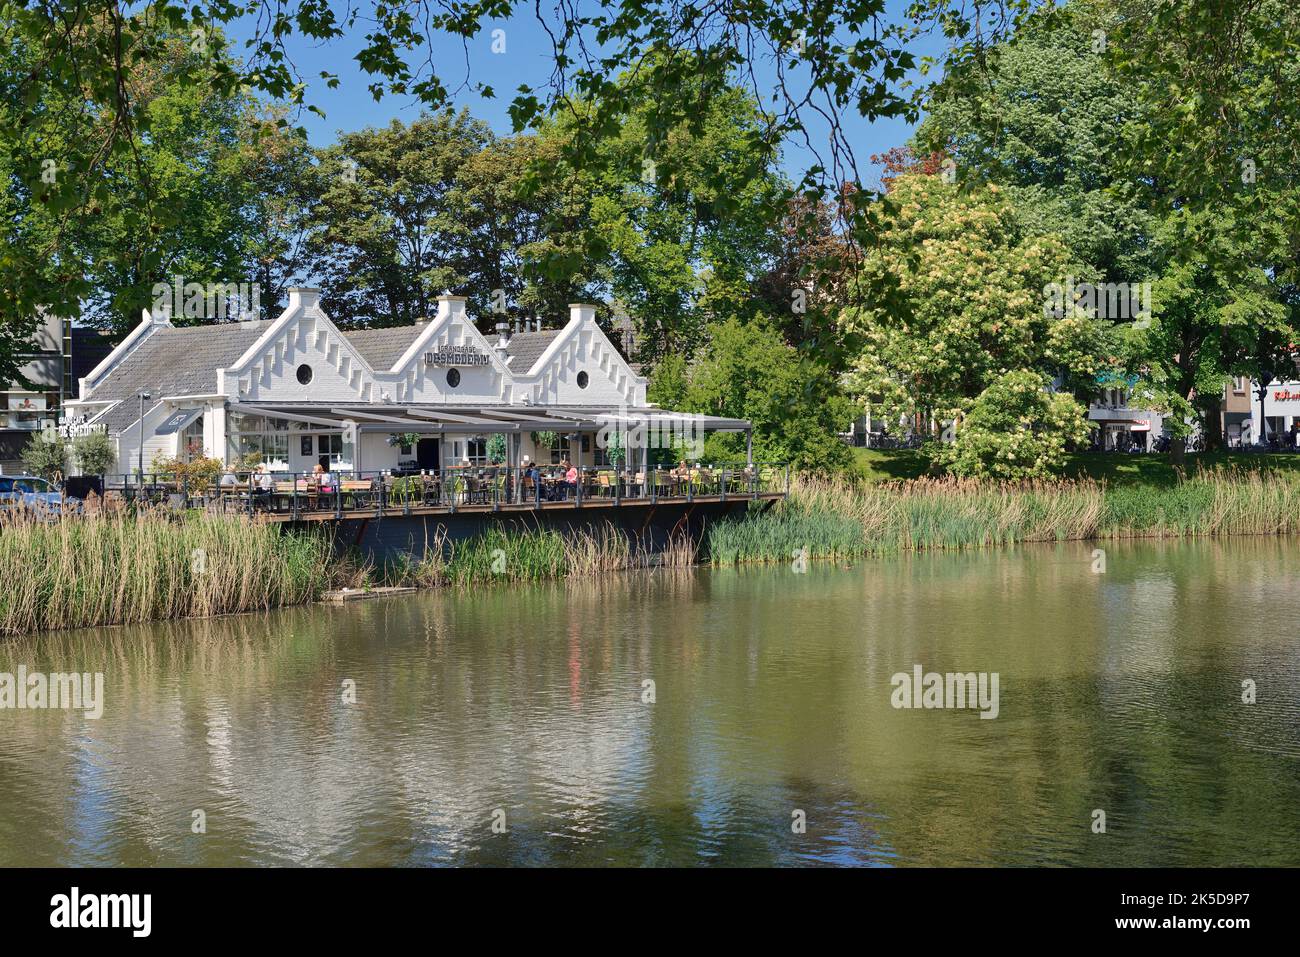 Restaurant with terrace on a pond, Goes, Zuid-Beveland, Zeeland, Netherlands Stock Photo